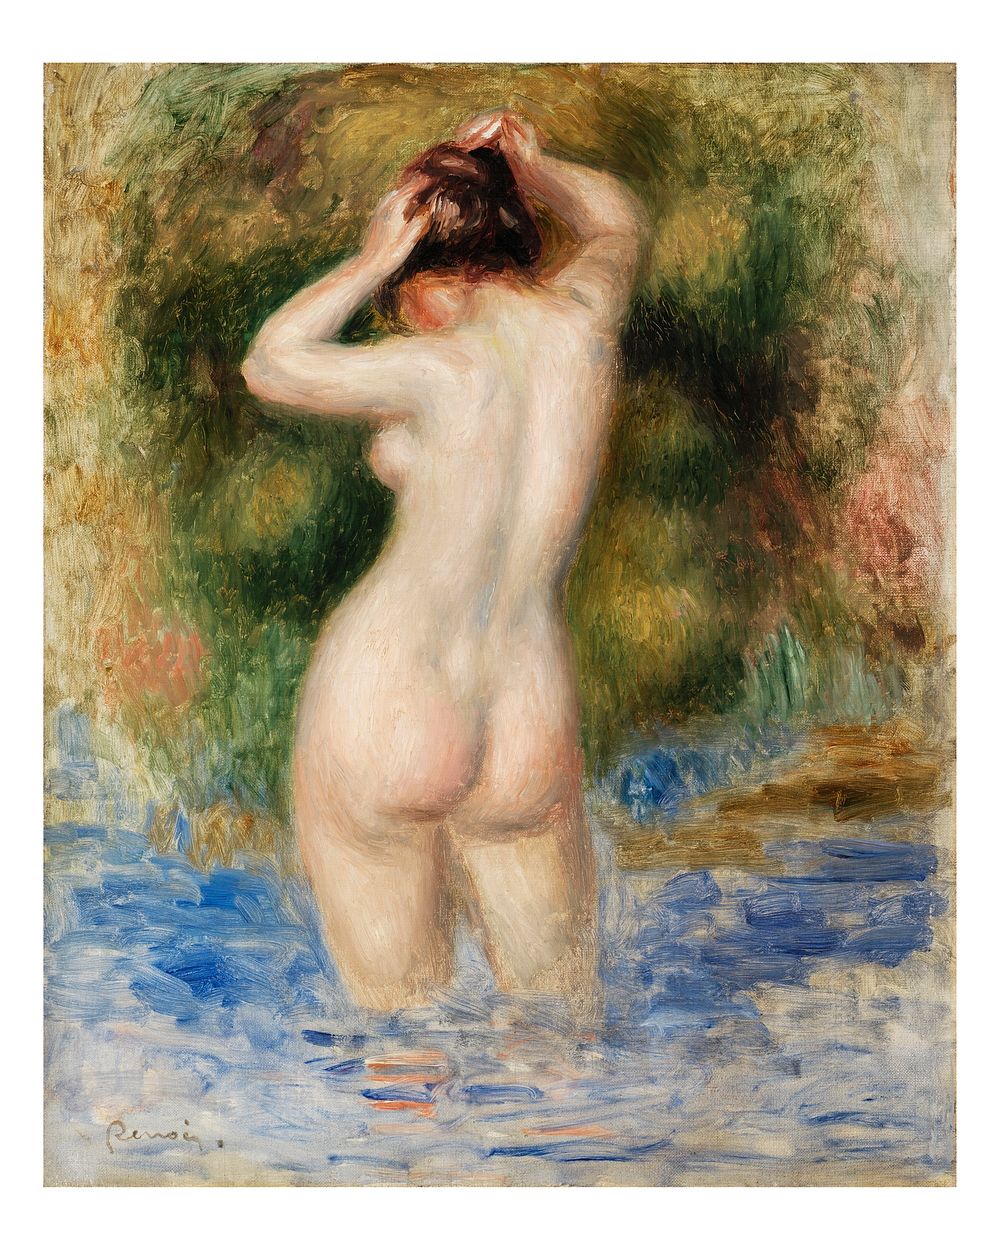 Renoir nude art print, vintage portrait painting, woman bathing in a river